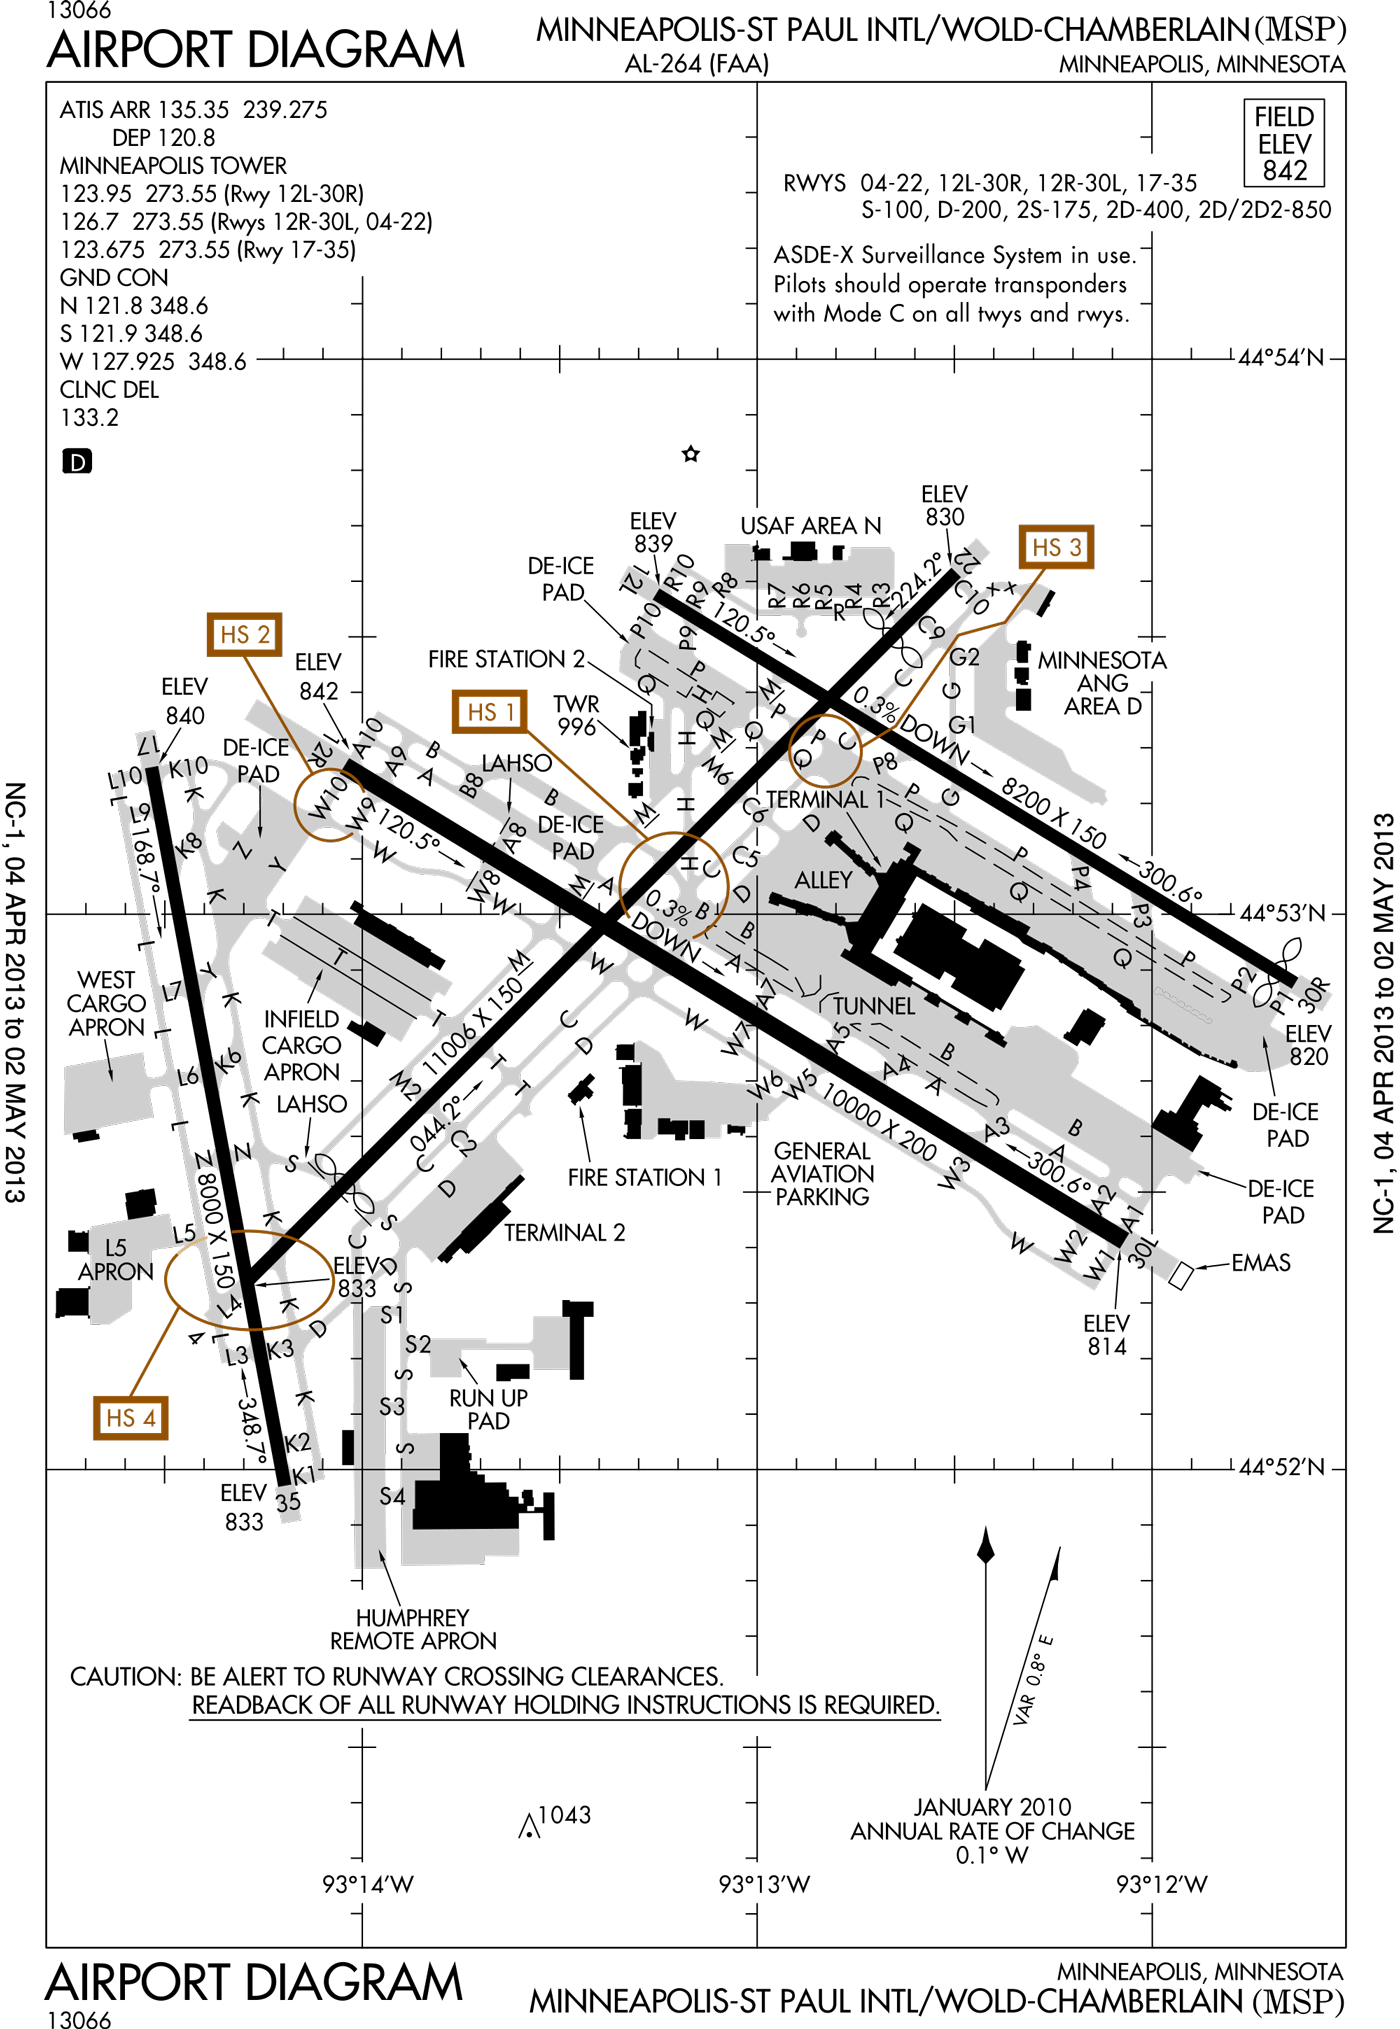 MinneapolisSaint Paul Intl. Airport Spotting Guide